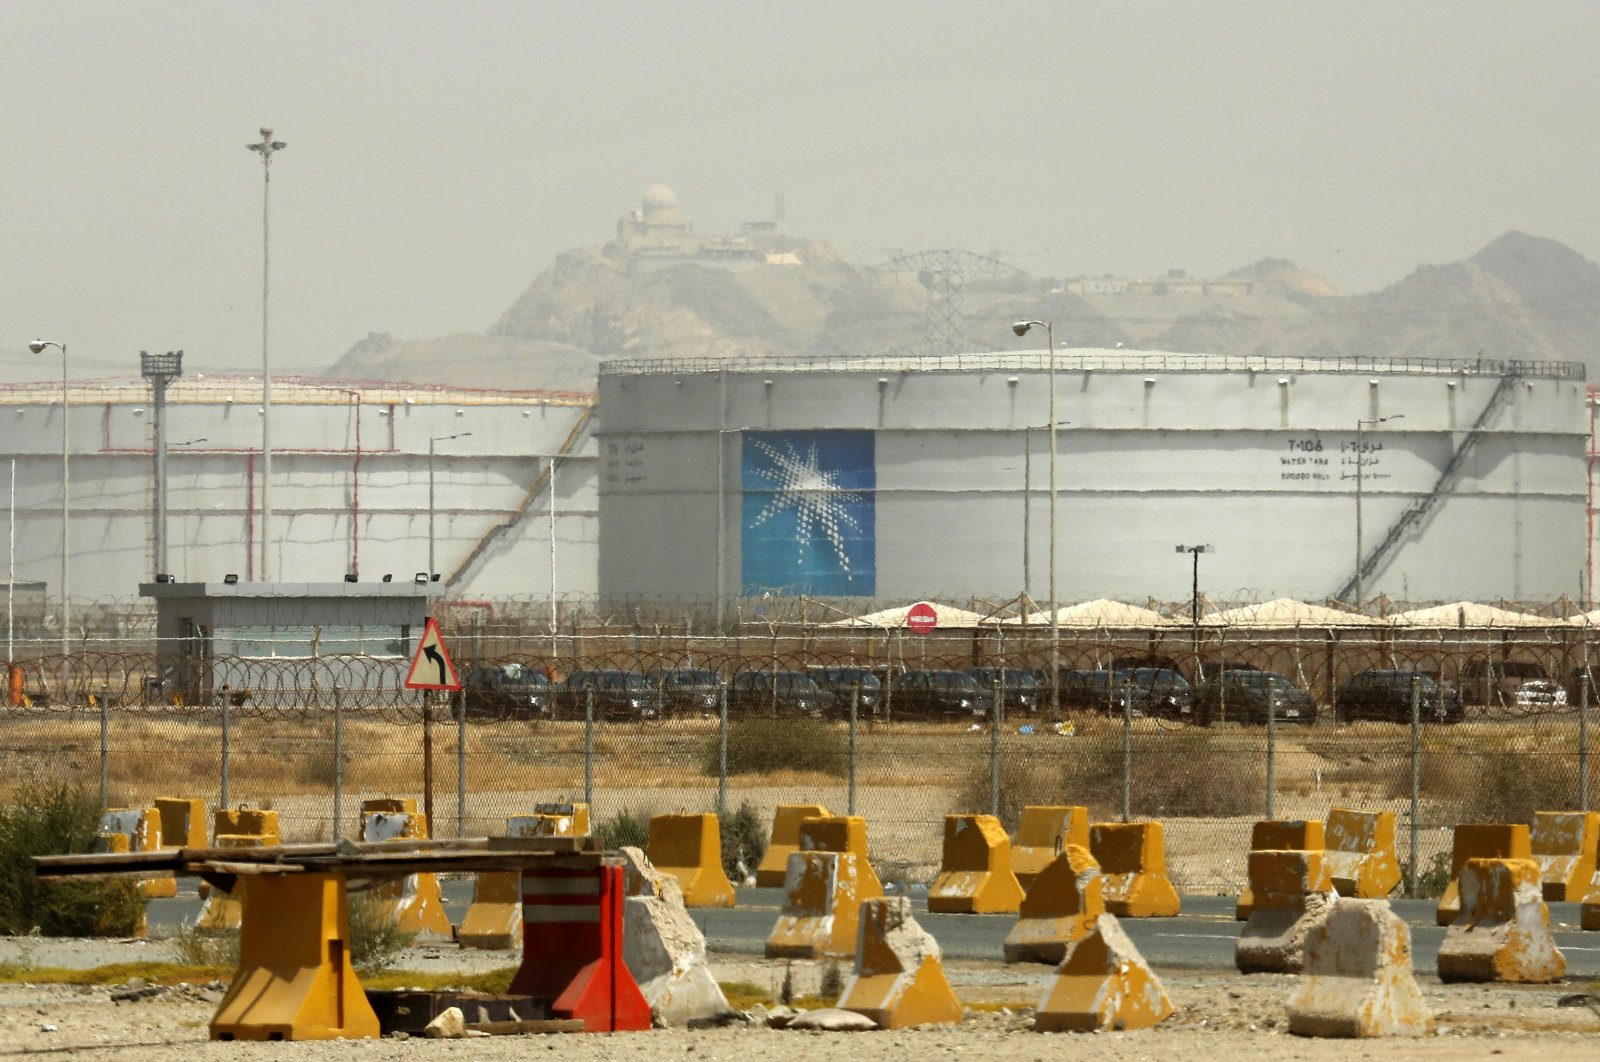 Storage tanks are seen at the North Jiddah bulk plant, an Aramco oil facility, in Jiddah, Saudi Arabia, March 21, 2021. (AP Photo)